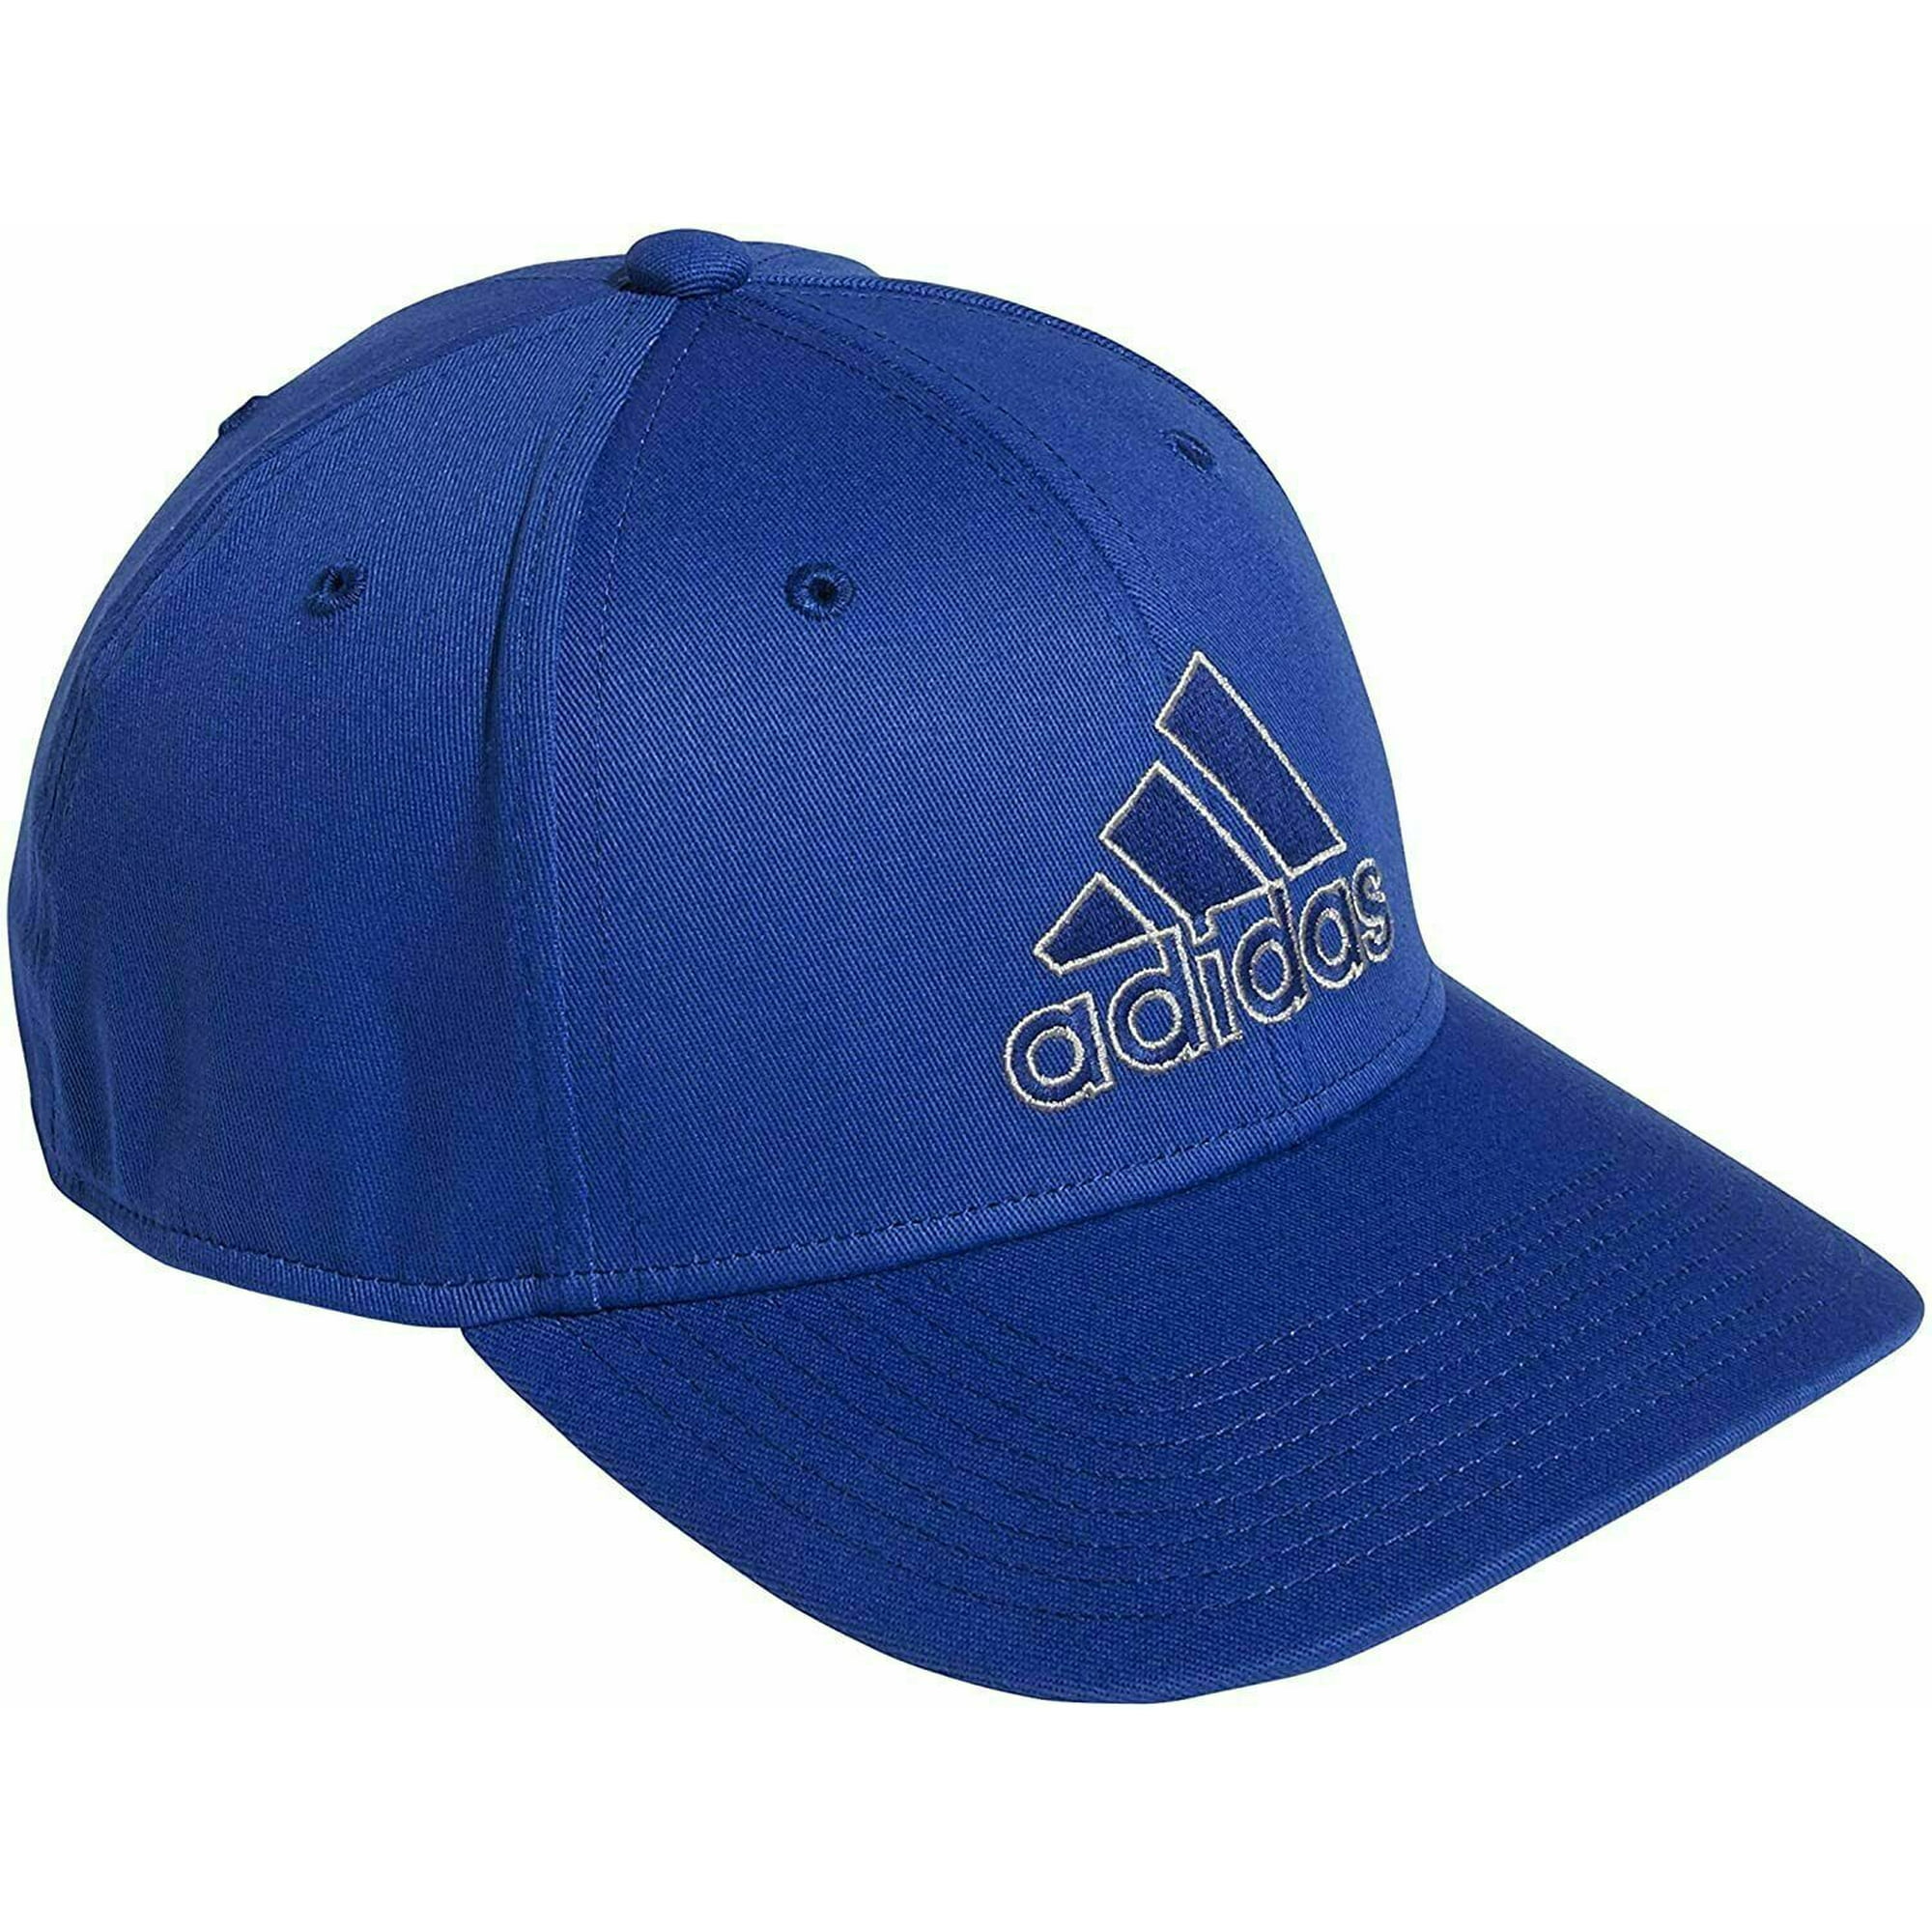 En smule Tegne forsikring veteran Adidas Men's Hat Royal Producer Stretch Fit Baseball Cap $24 Blue XL -  Walmart.com